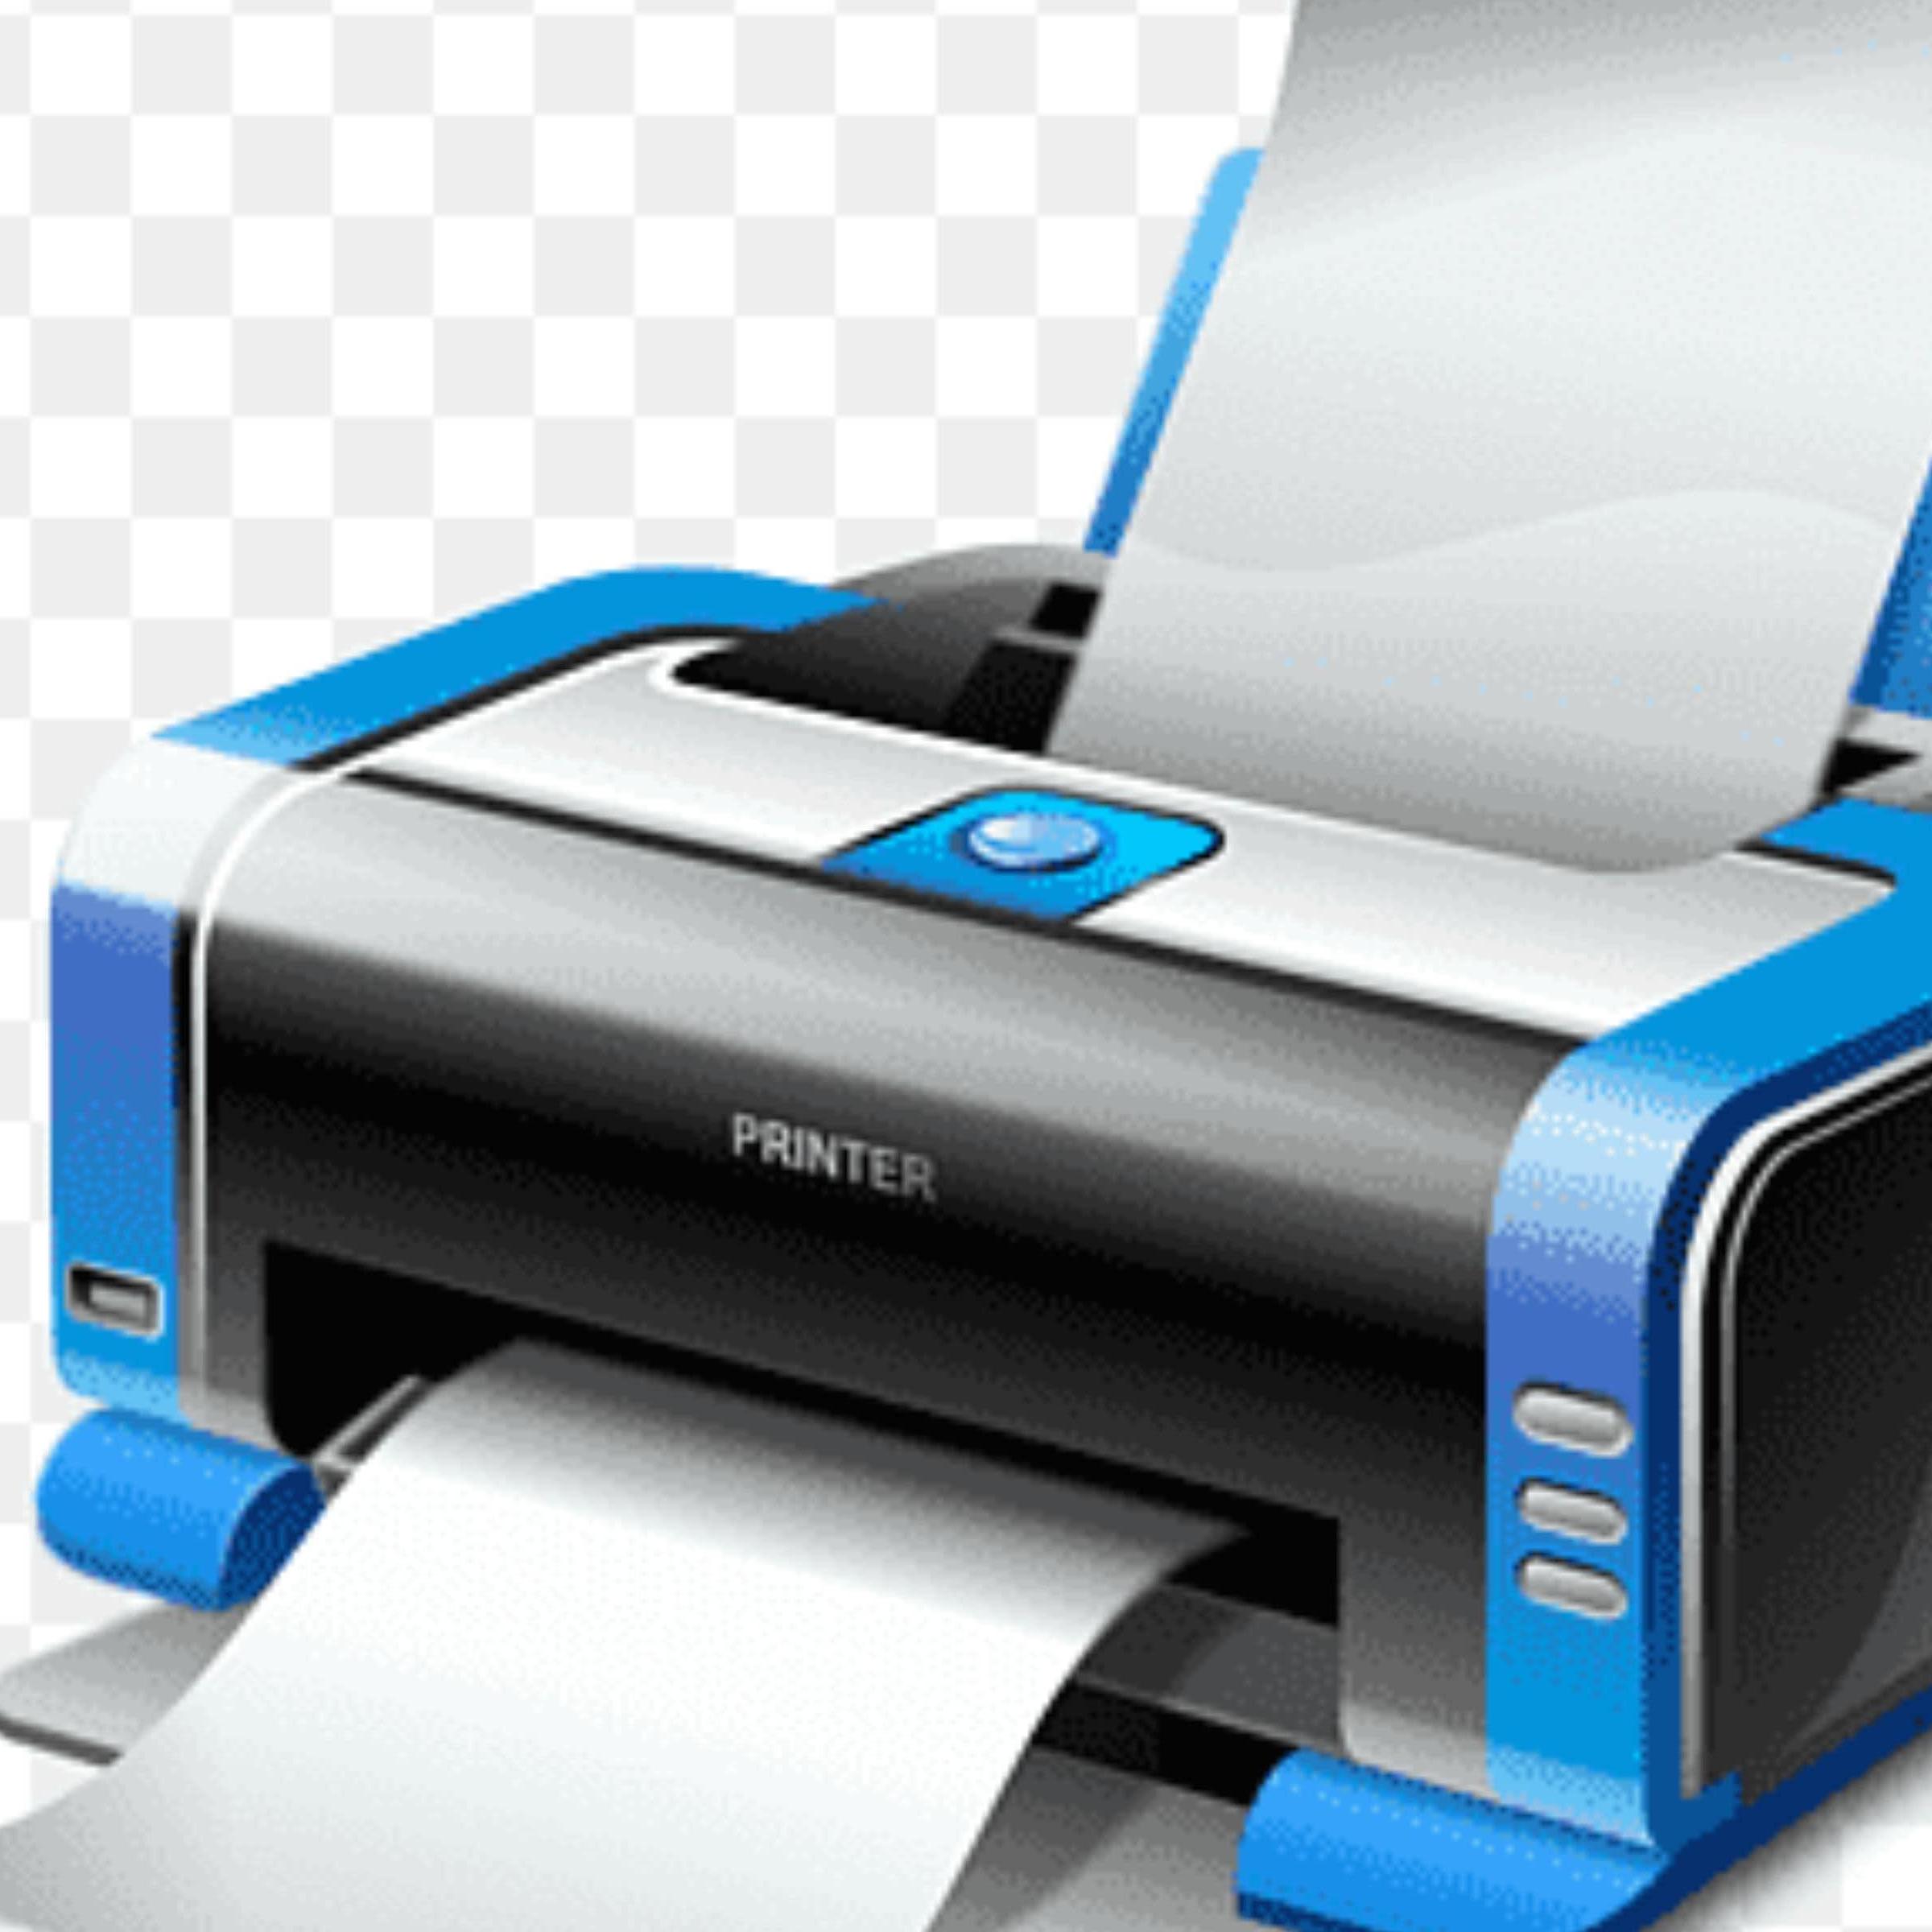 PrinterSupport